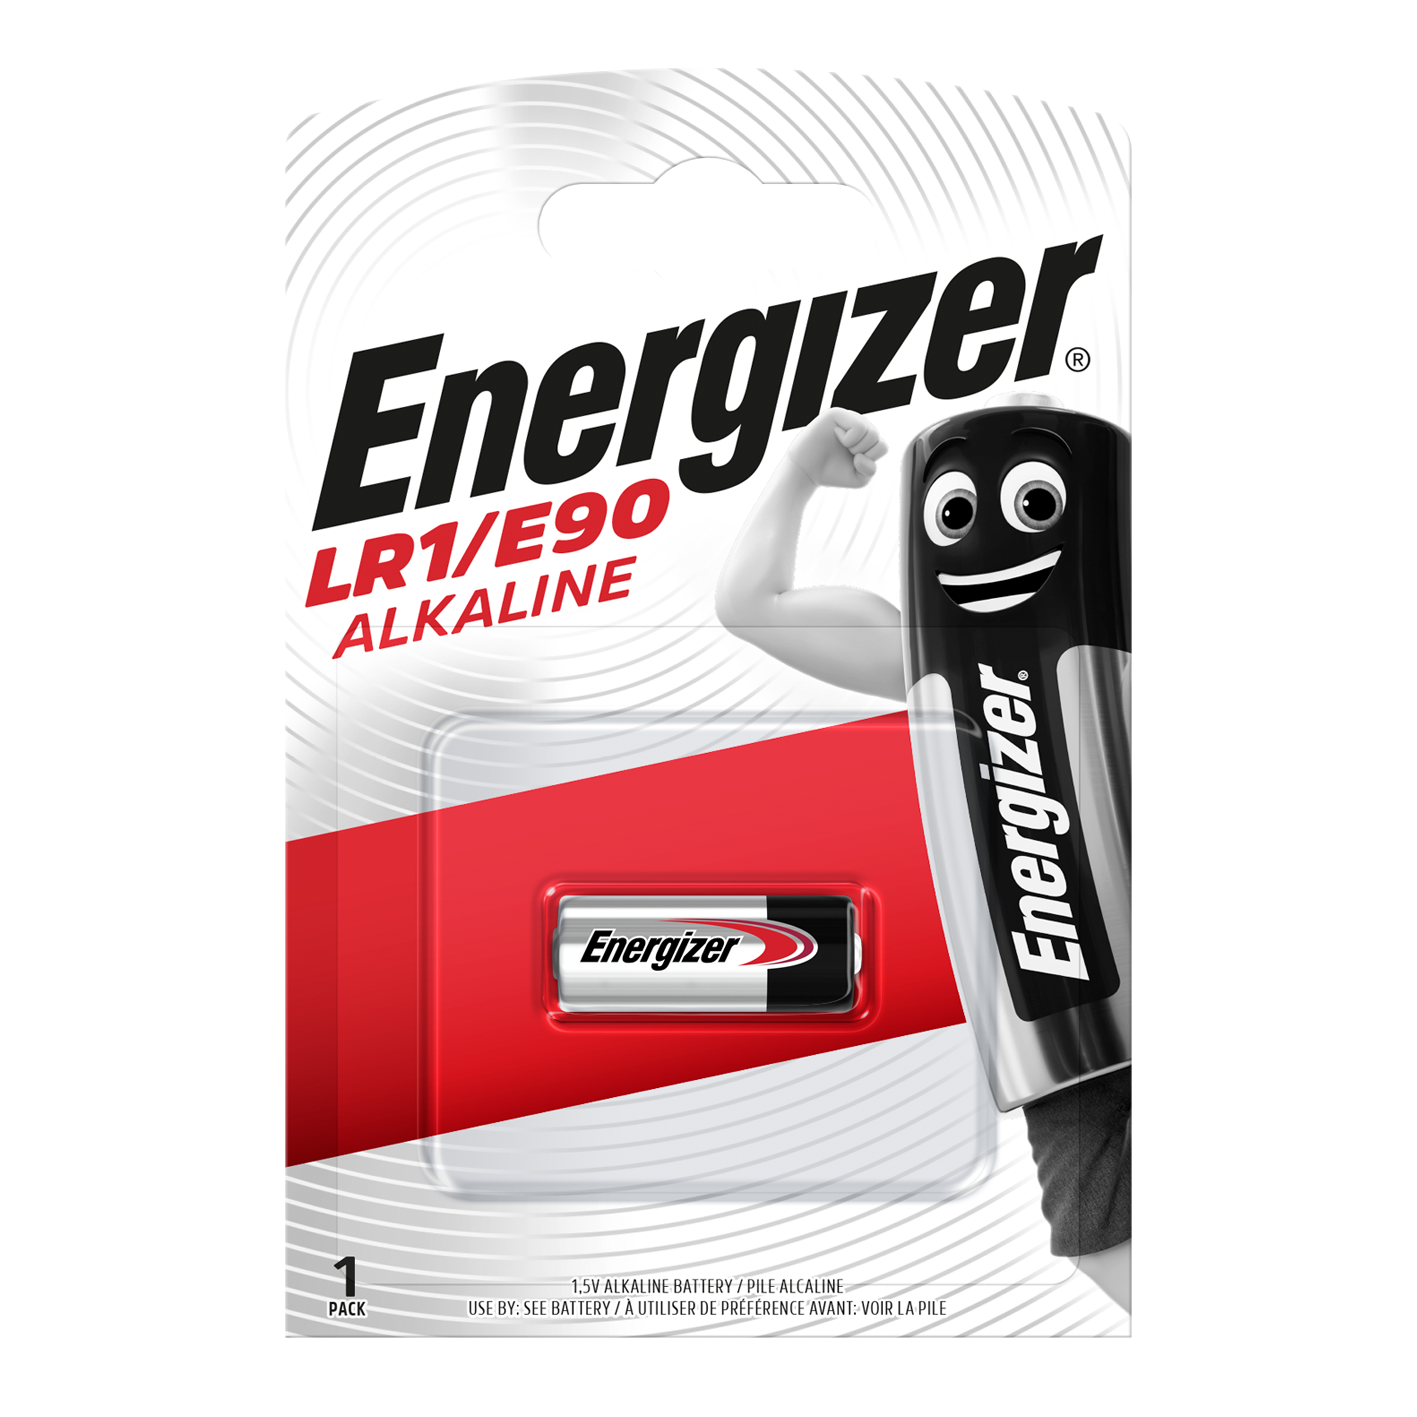 Energizer LR1/E90 alcalino, paquete de 1